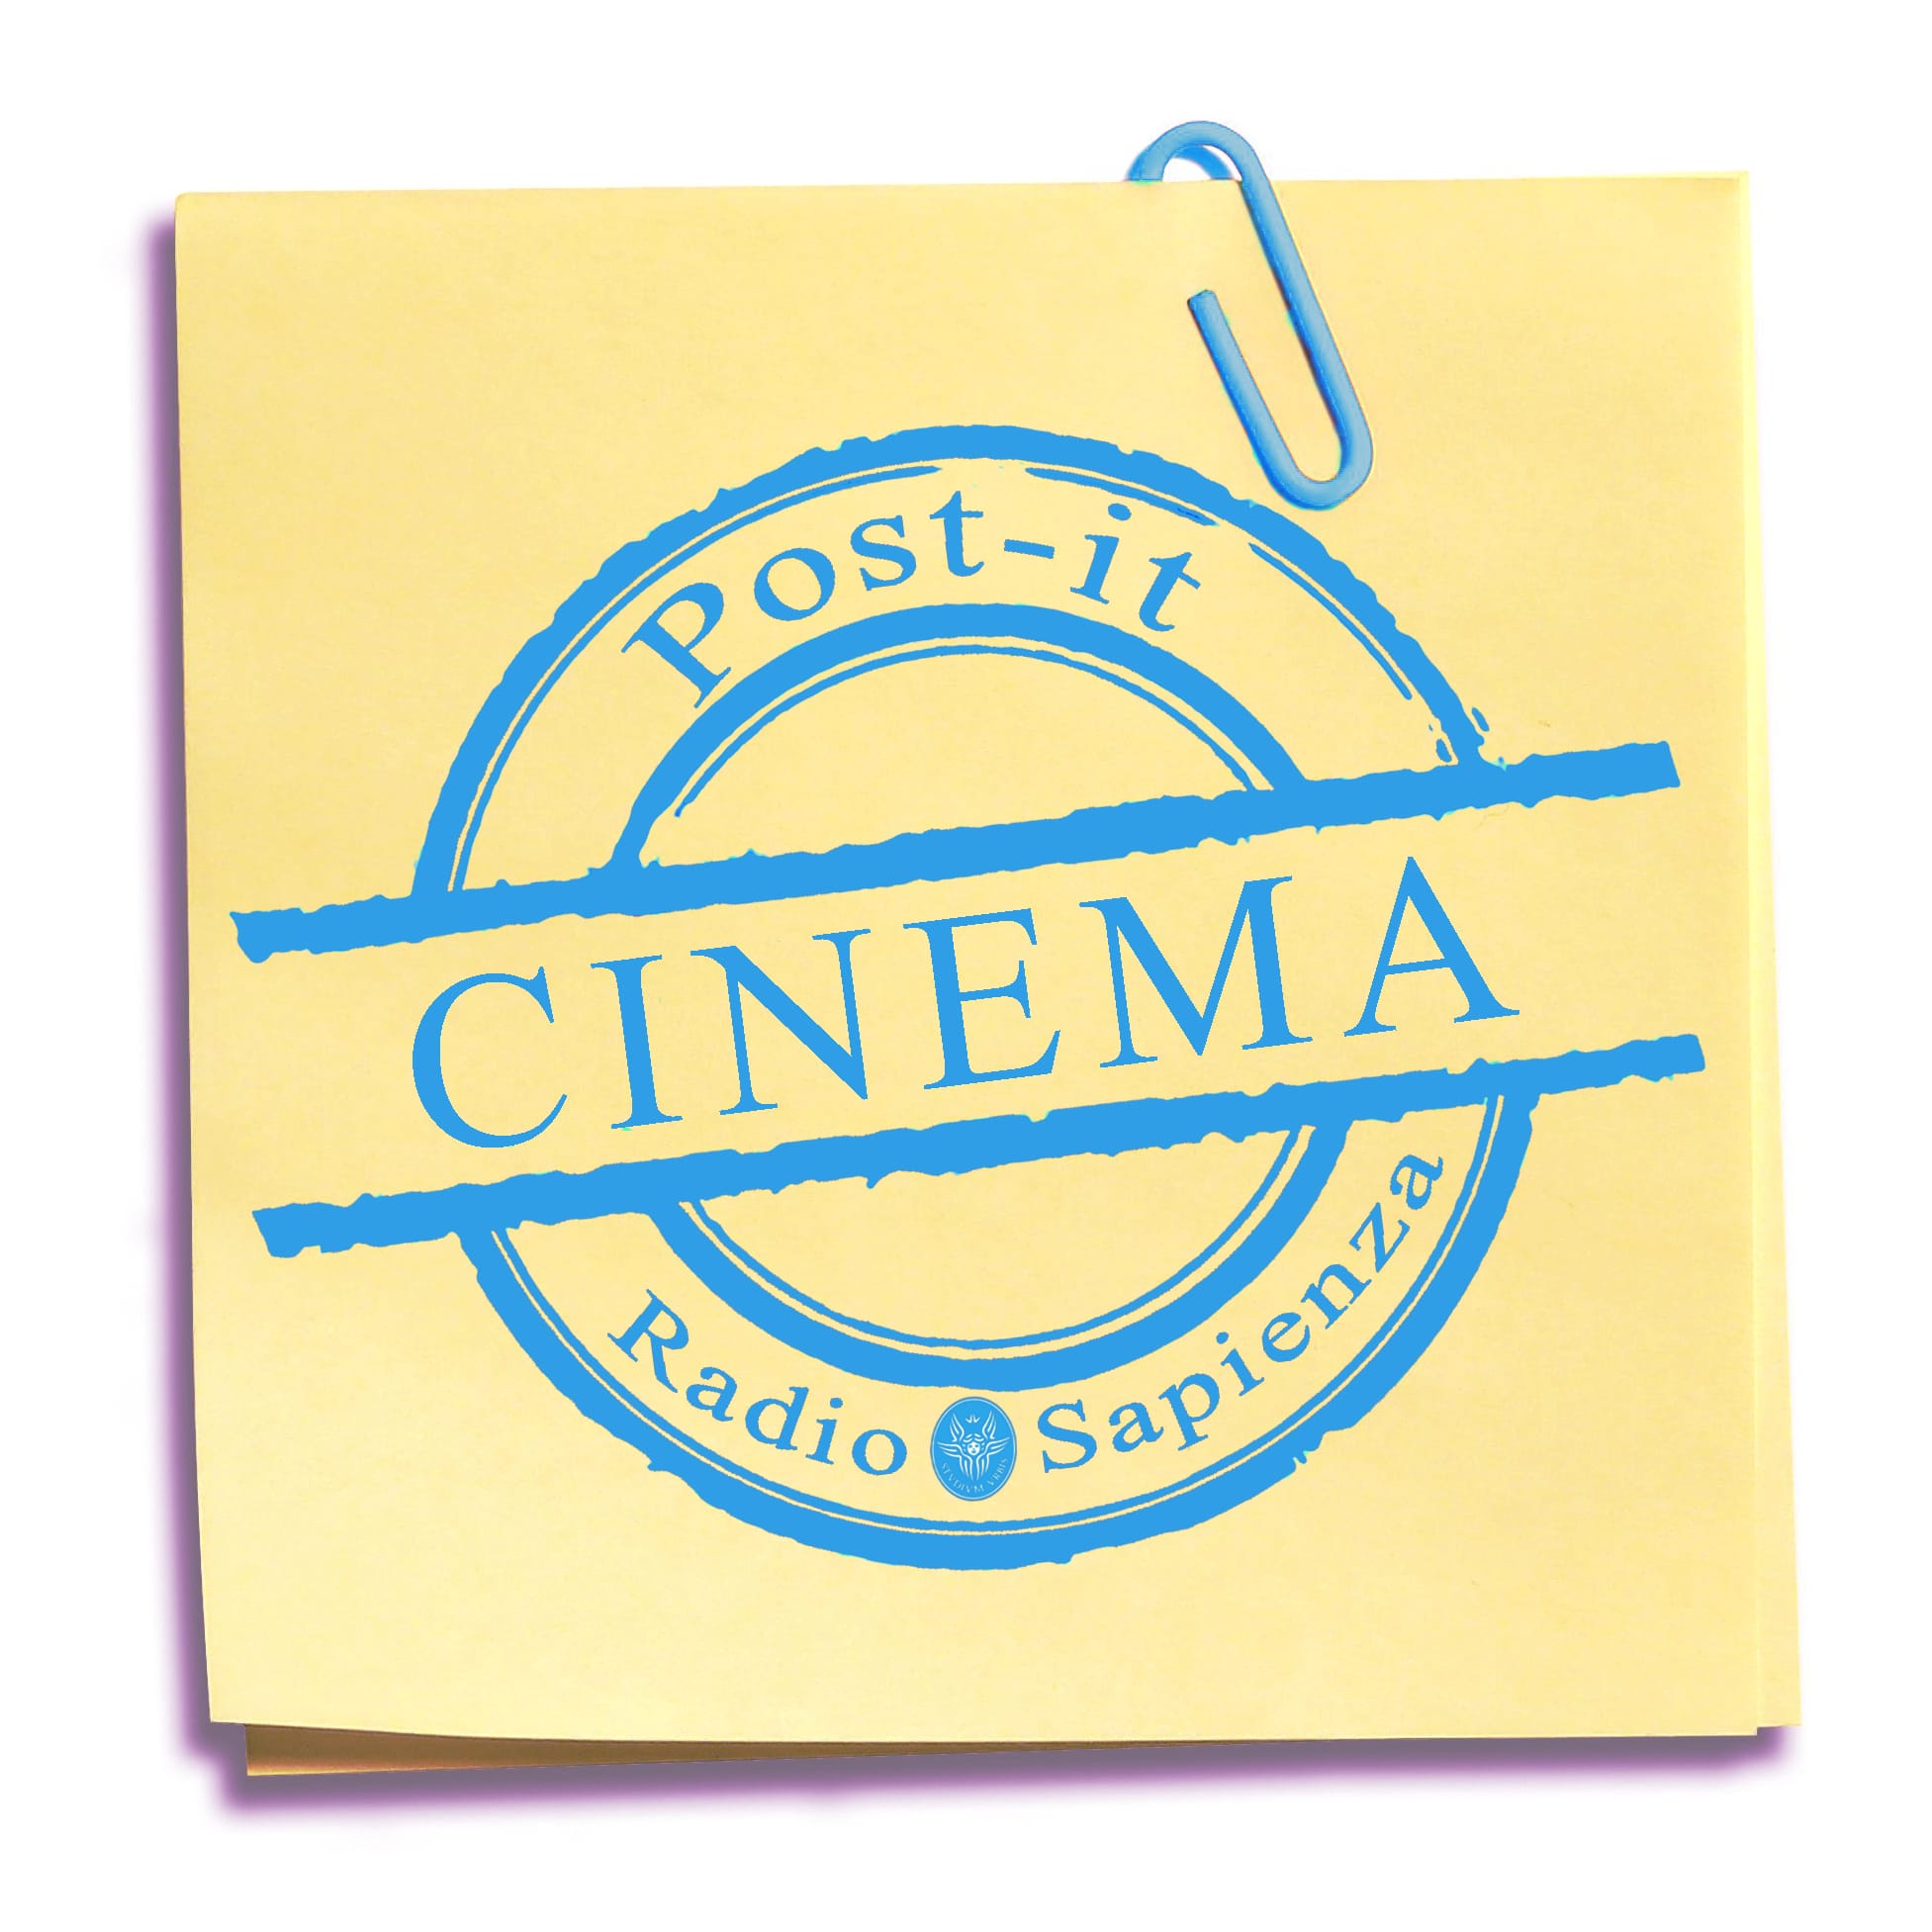 Post-it Cinema – Mercoledì 19 maggio